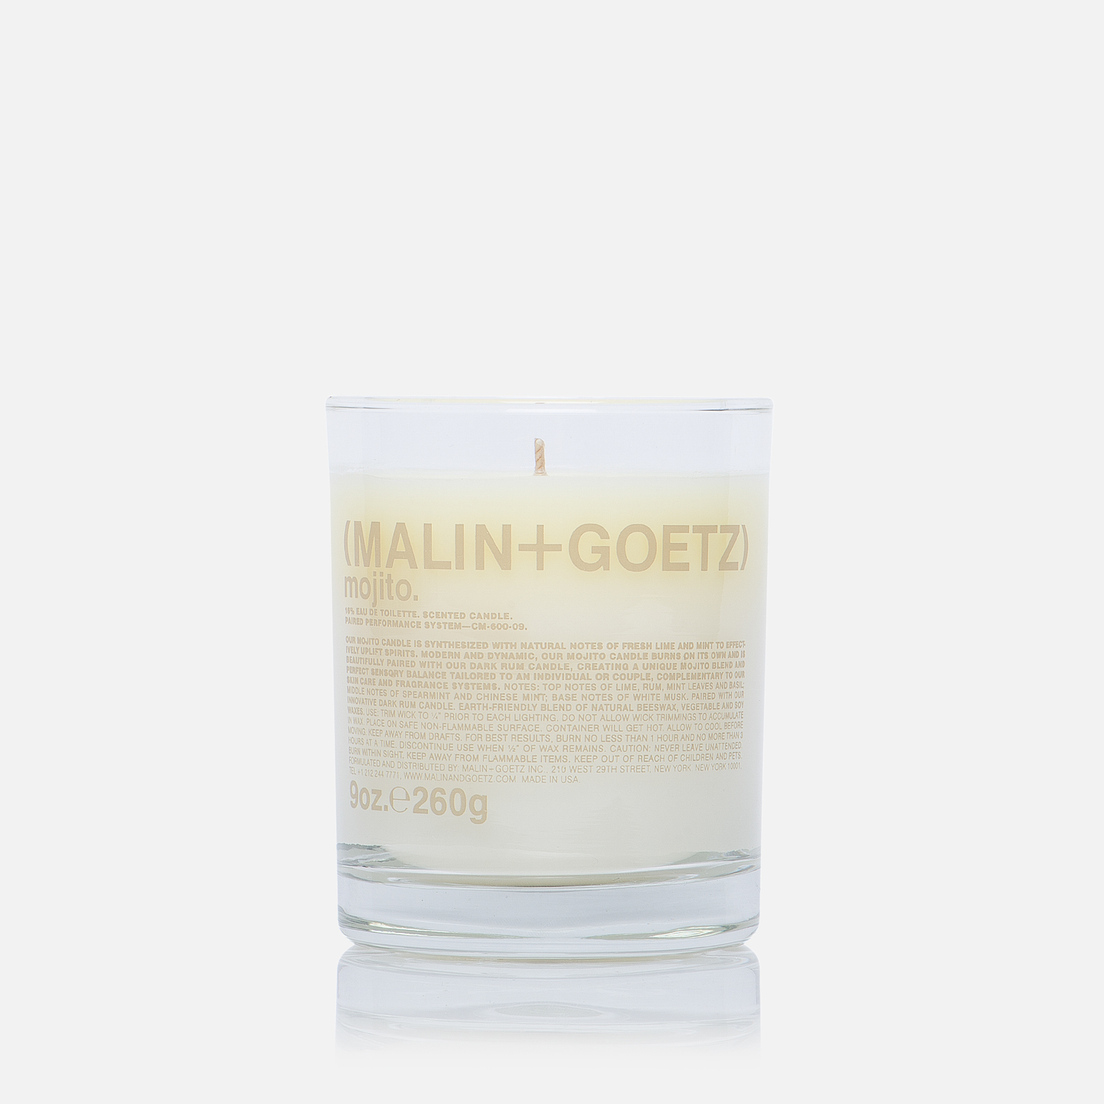 Malin+Goetz Ароматическая свеча Mojito